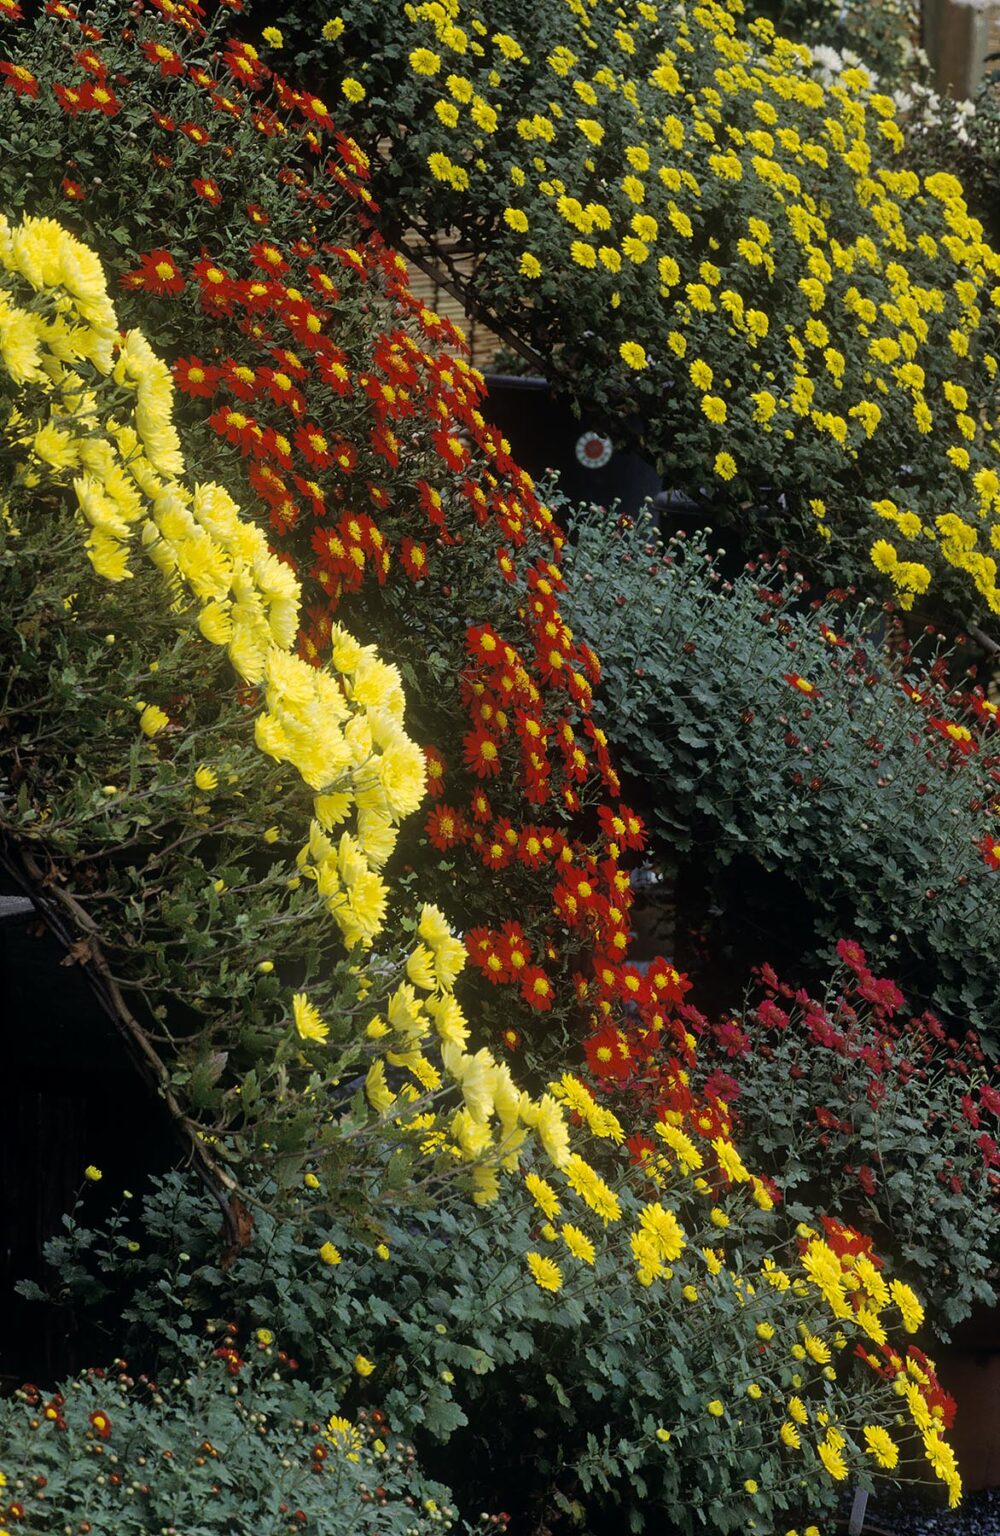 Multicolored BONSAI CHRYSANTHEMUMS on display - JAPAN